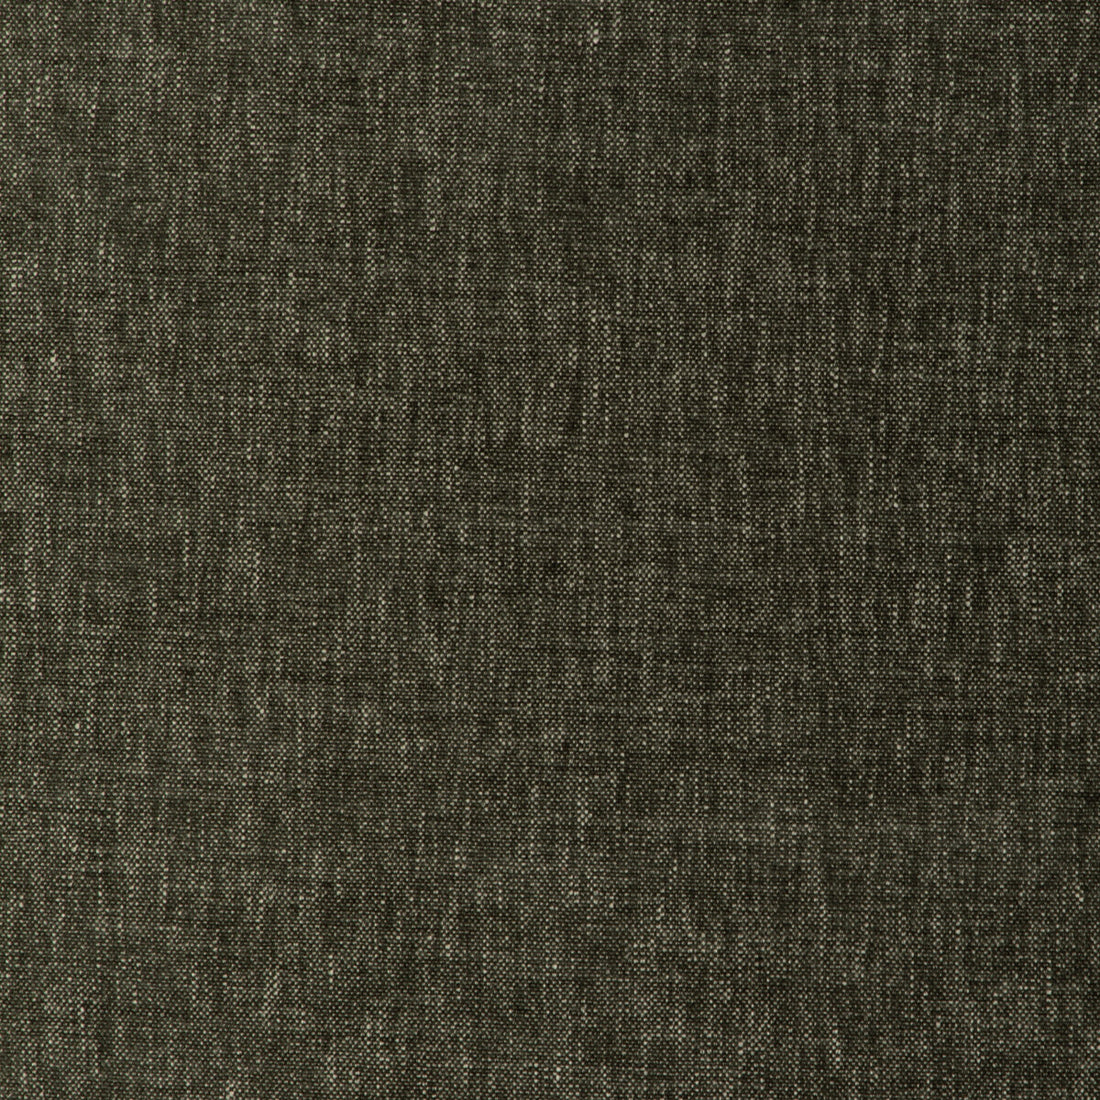 Kravet Smart fabric in 36663-53 color - pattern 36663.53.0 - by Kravet Smart in the Performance Kravetarmor collection